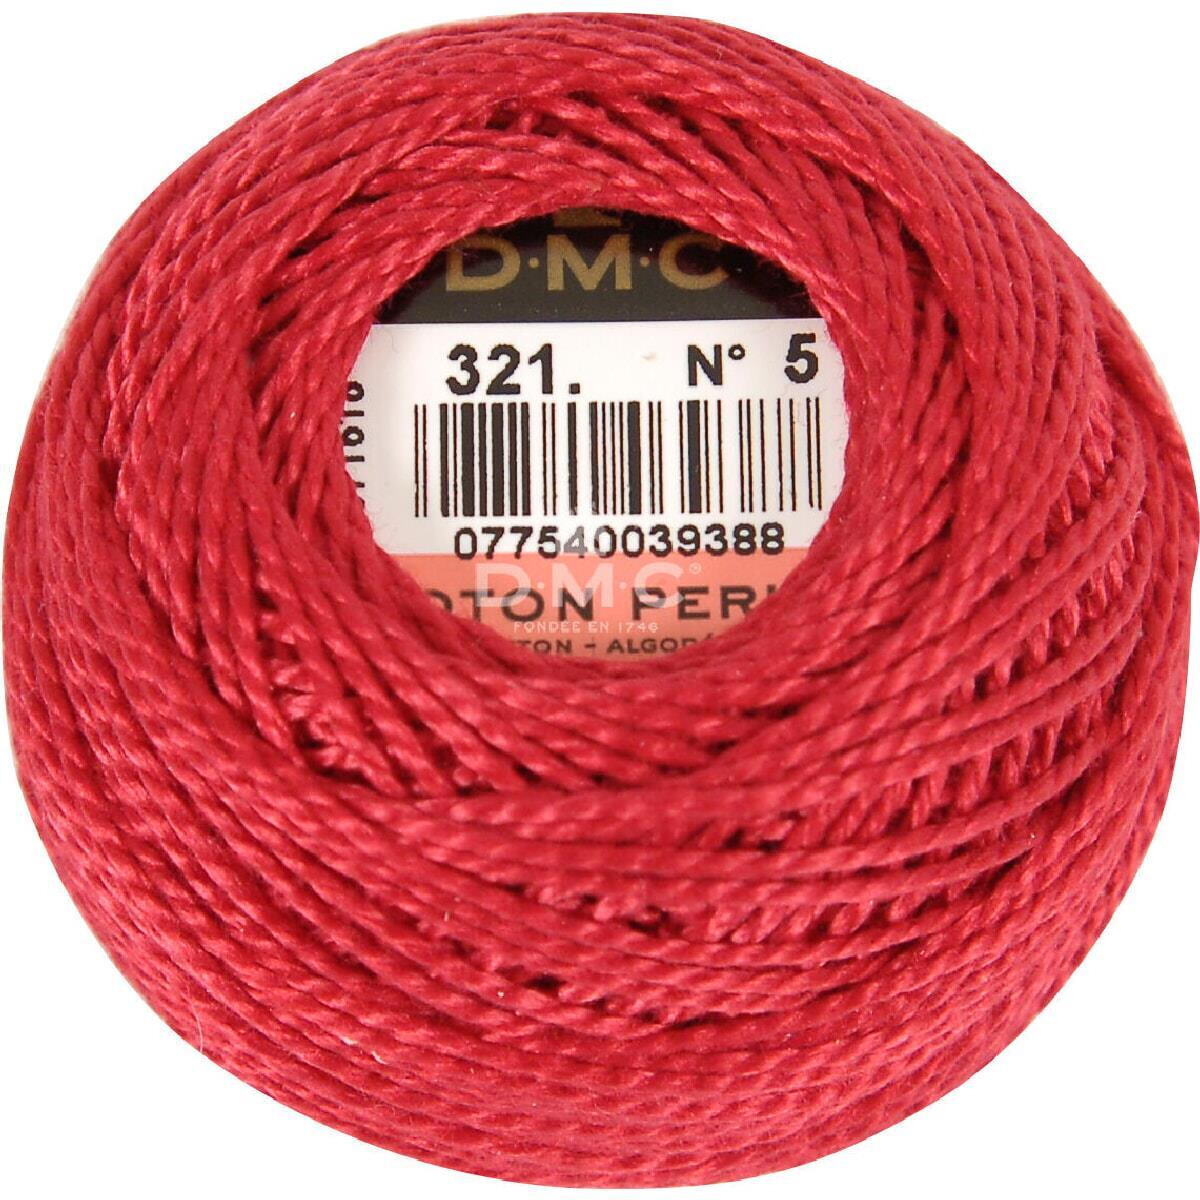 DMC Pearl Cotton on a ball Size 5, 10g, 116A/5-321